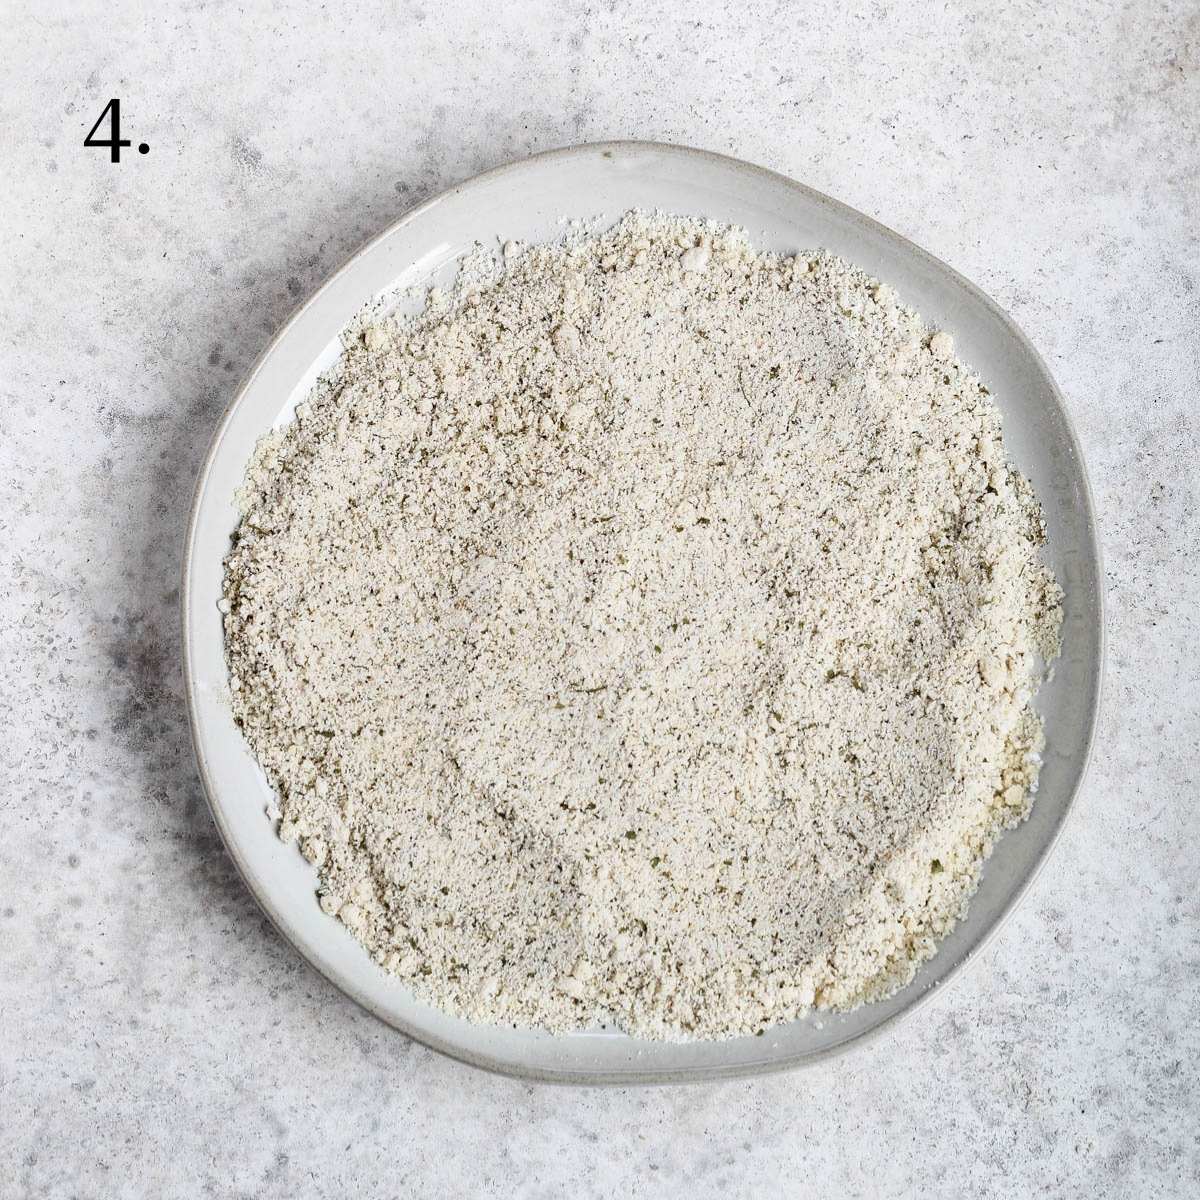 A plate with mixed almond flour, tapioca flour, garlic powder, onion powder, dried parsley, salt, and pepper.